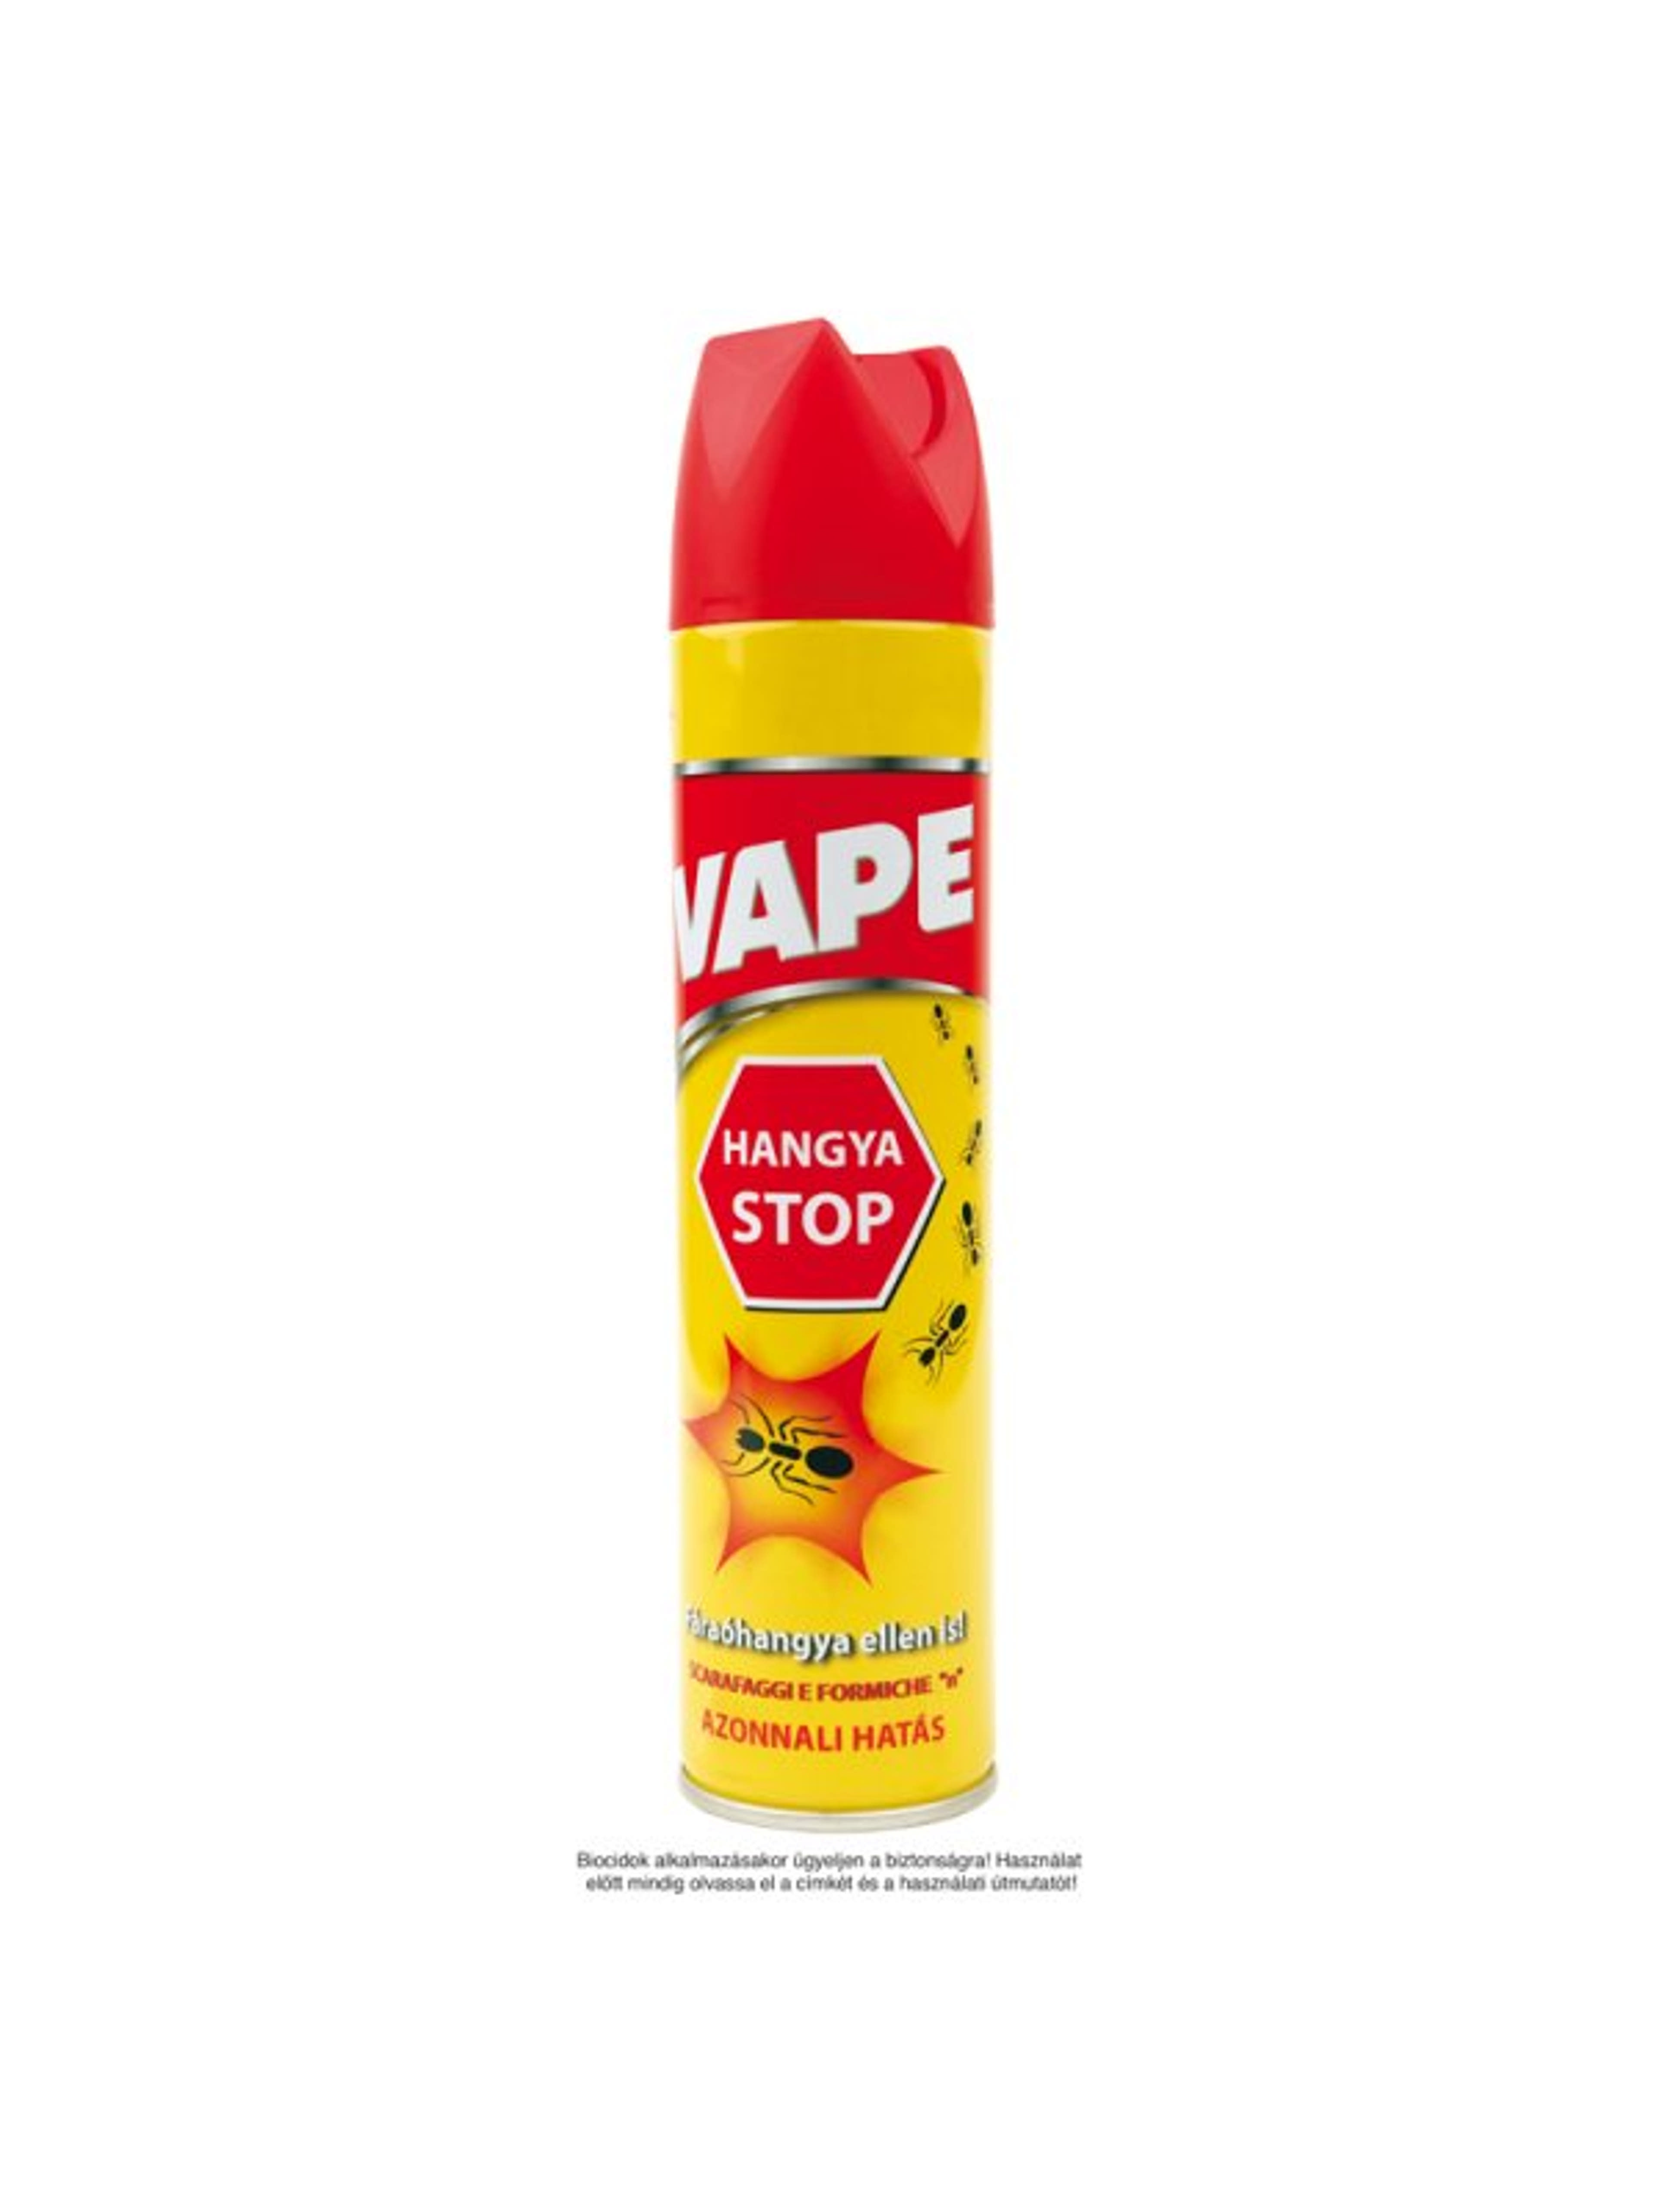 Vape Hangya Stop Spray - 300 ml-2